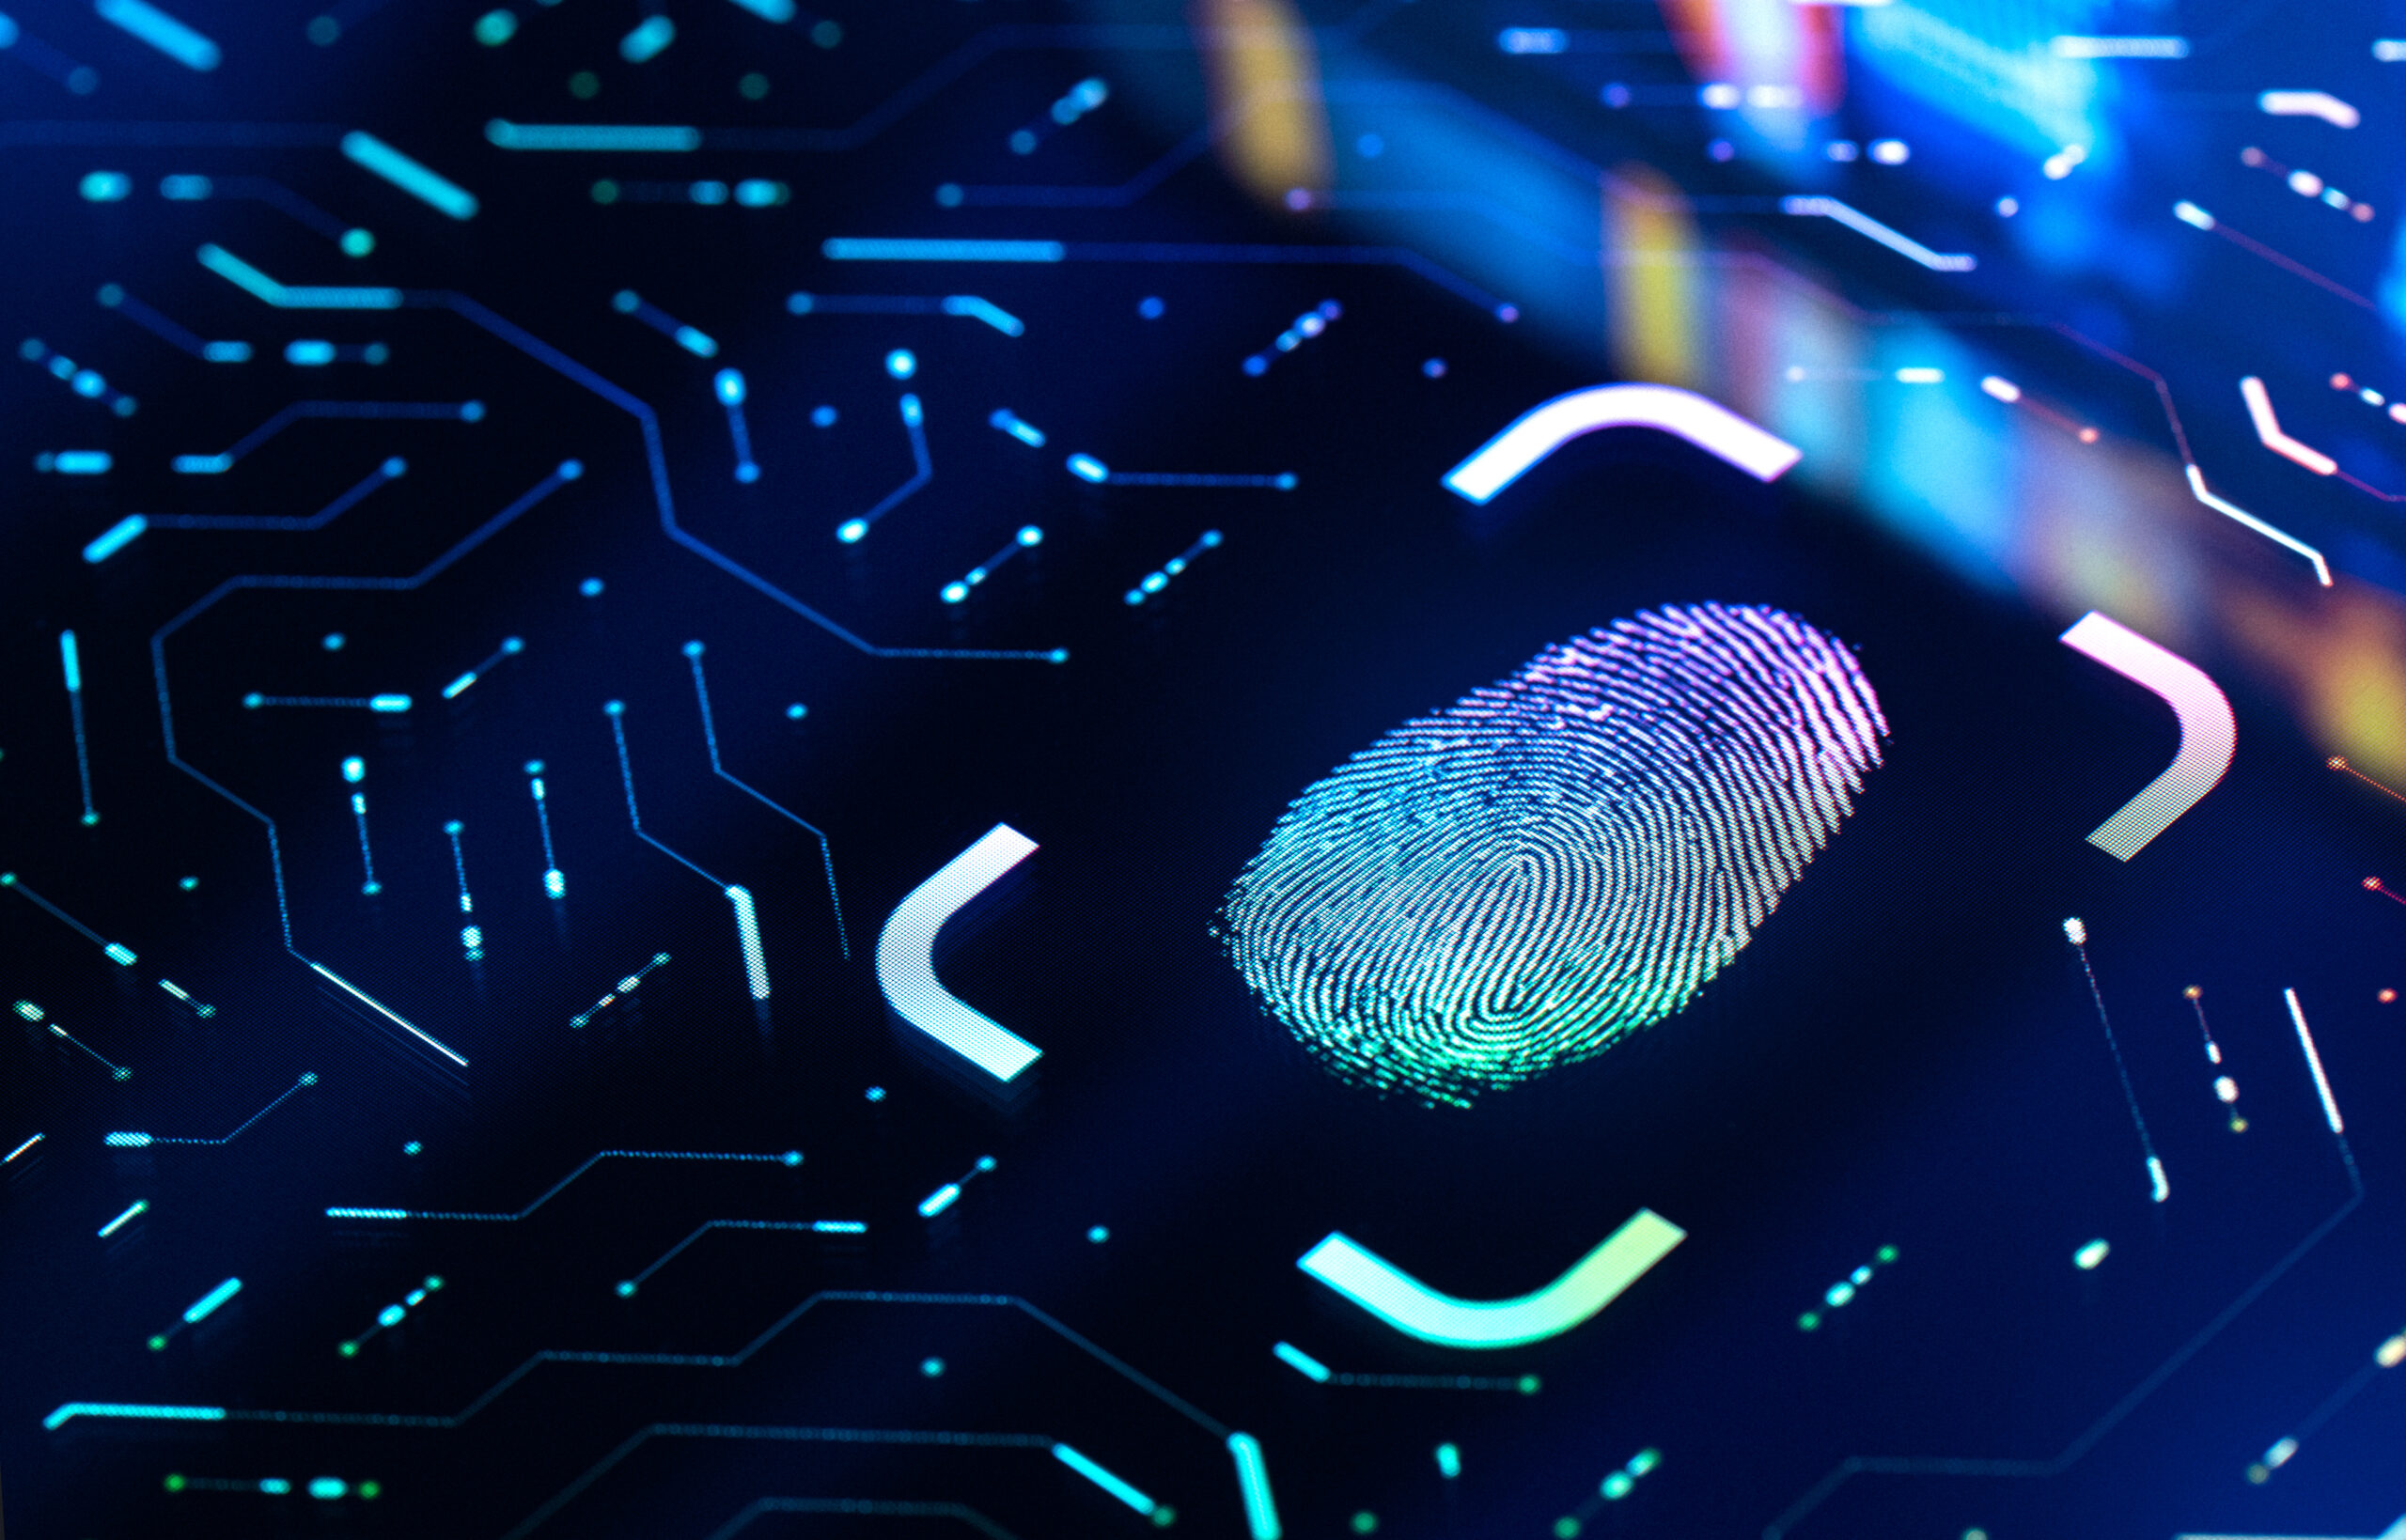 Biometric security